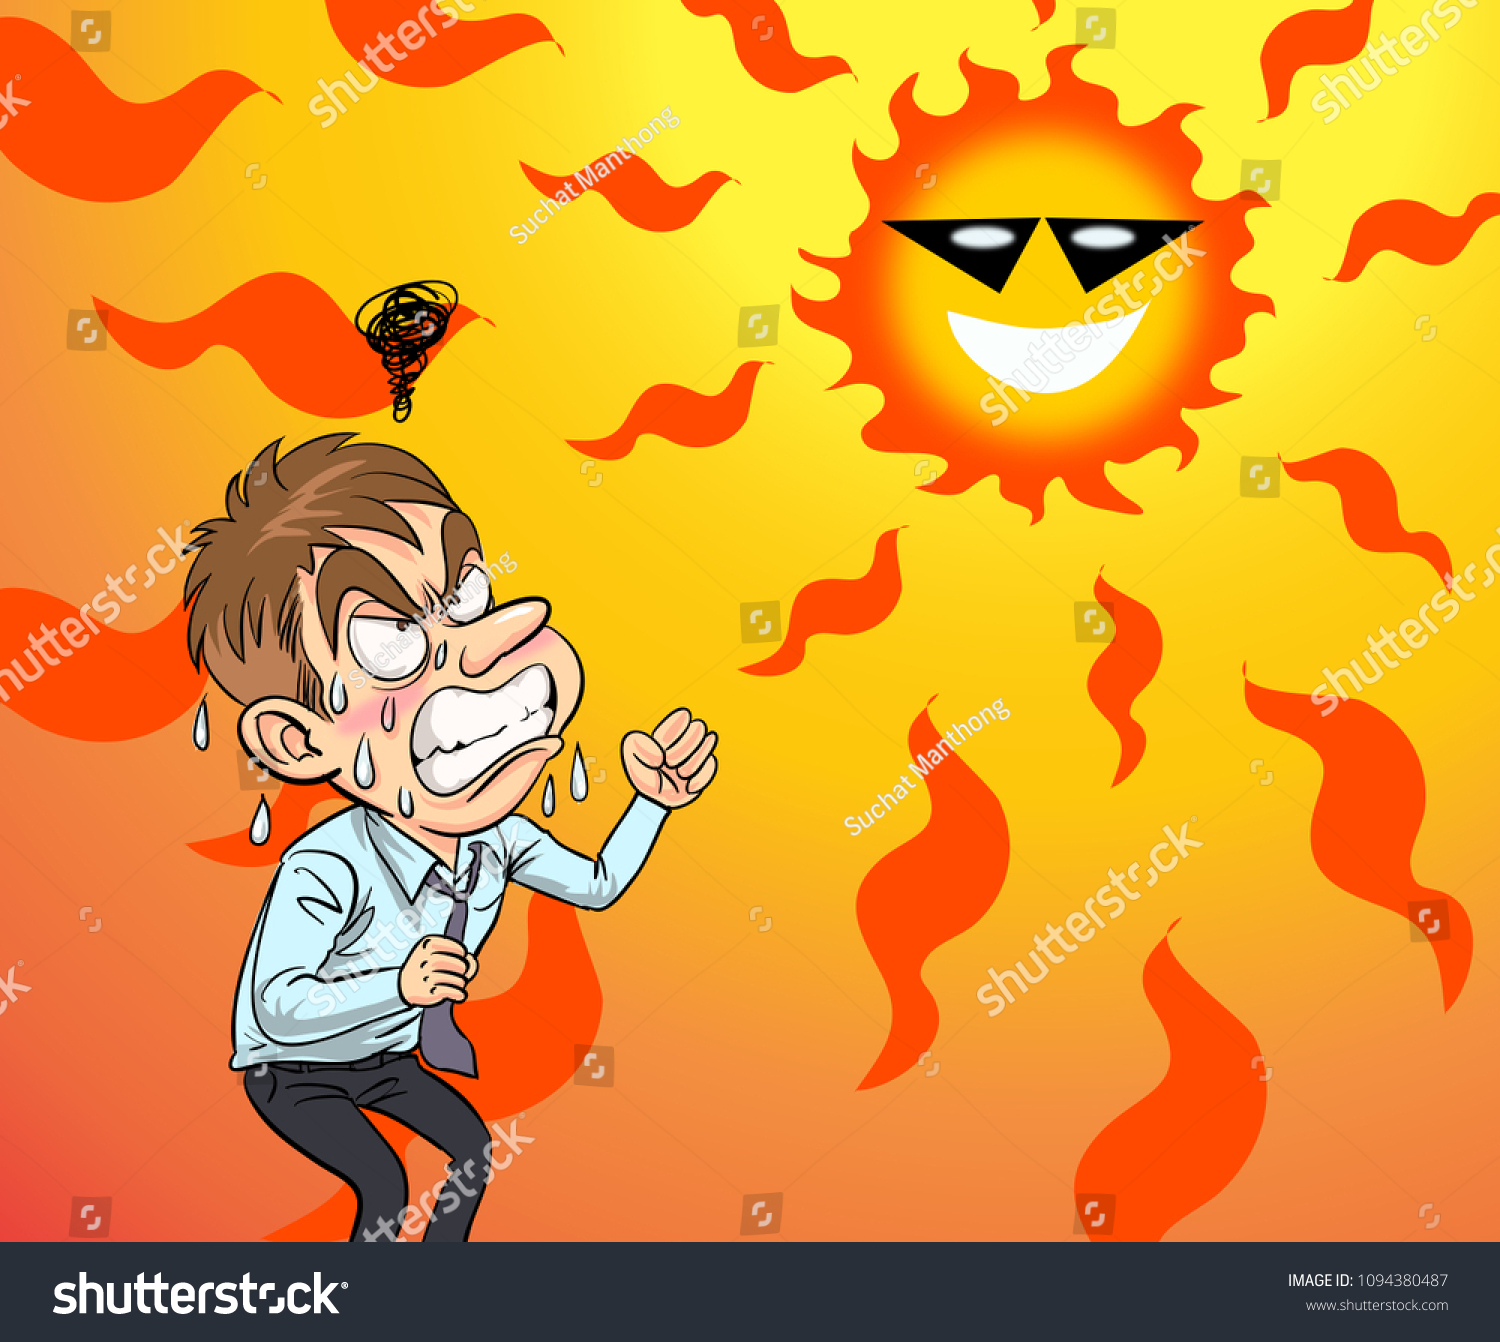 Hot Sun Irritated Mood Man Stock Illustration 1094380487